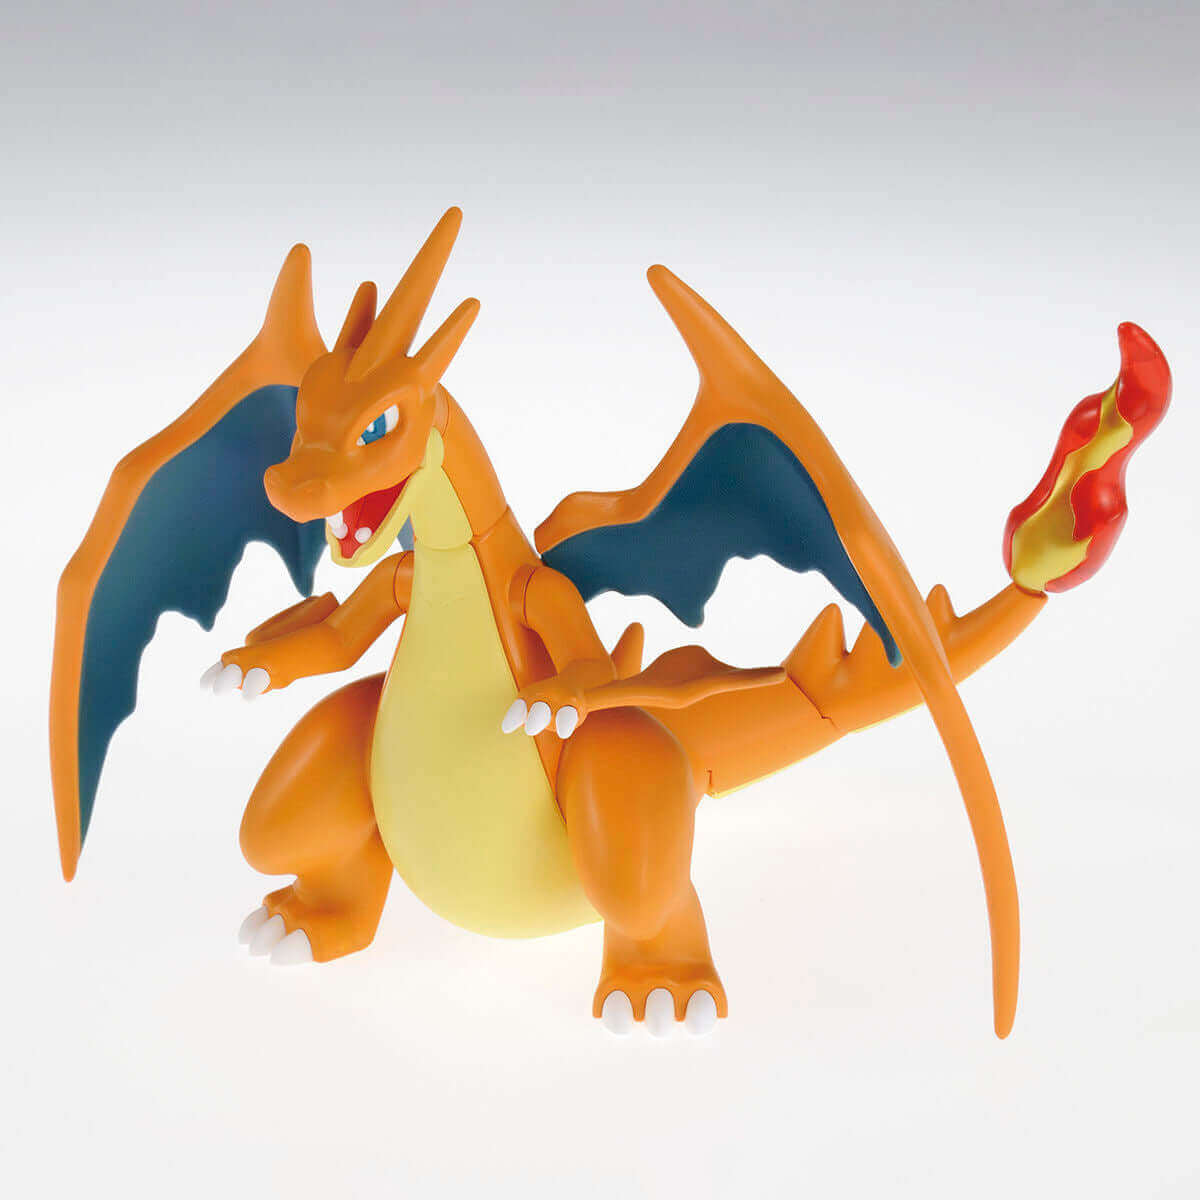 No.38 Mega Charizard Y Model kit - Pokémon Select Series collection - konbinistop